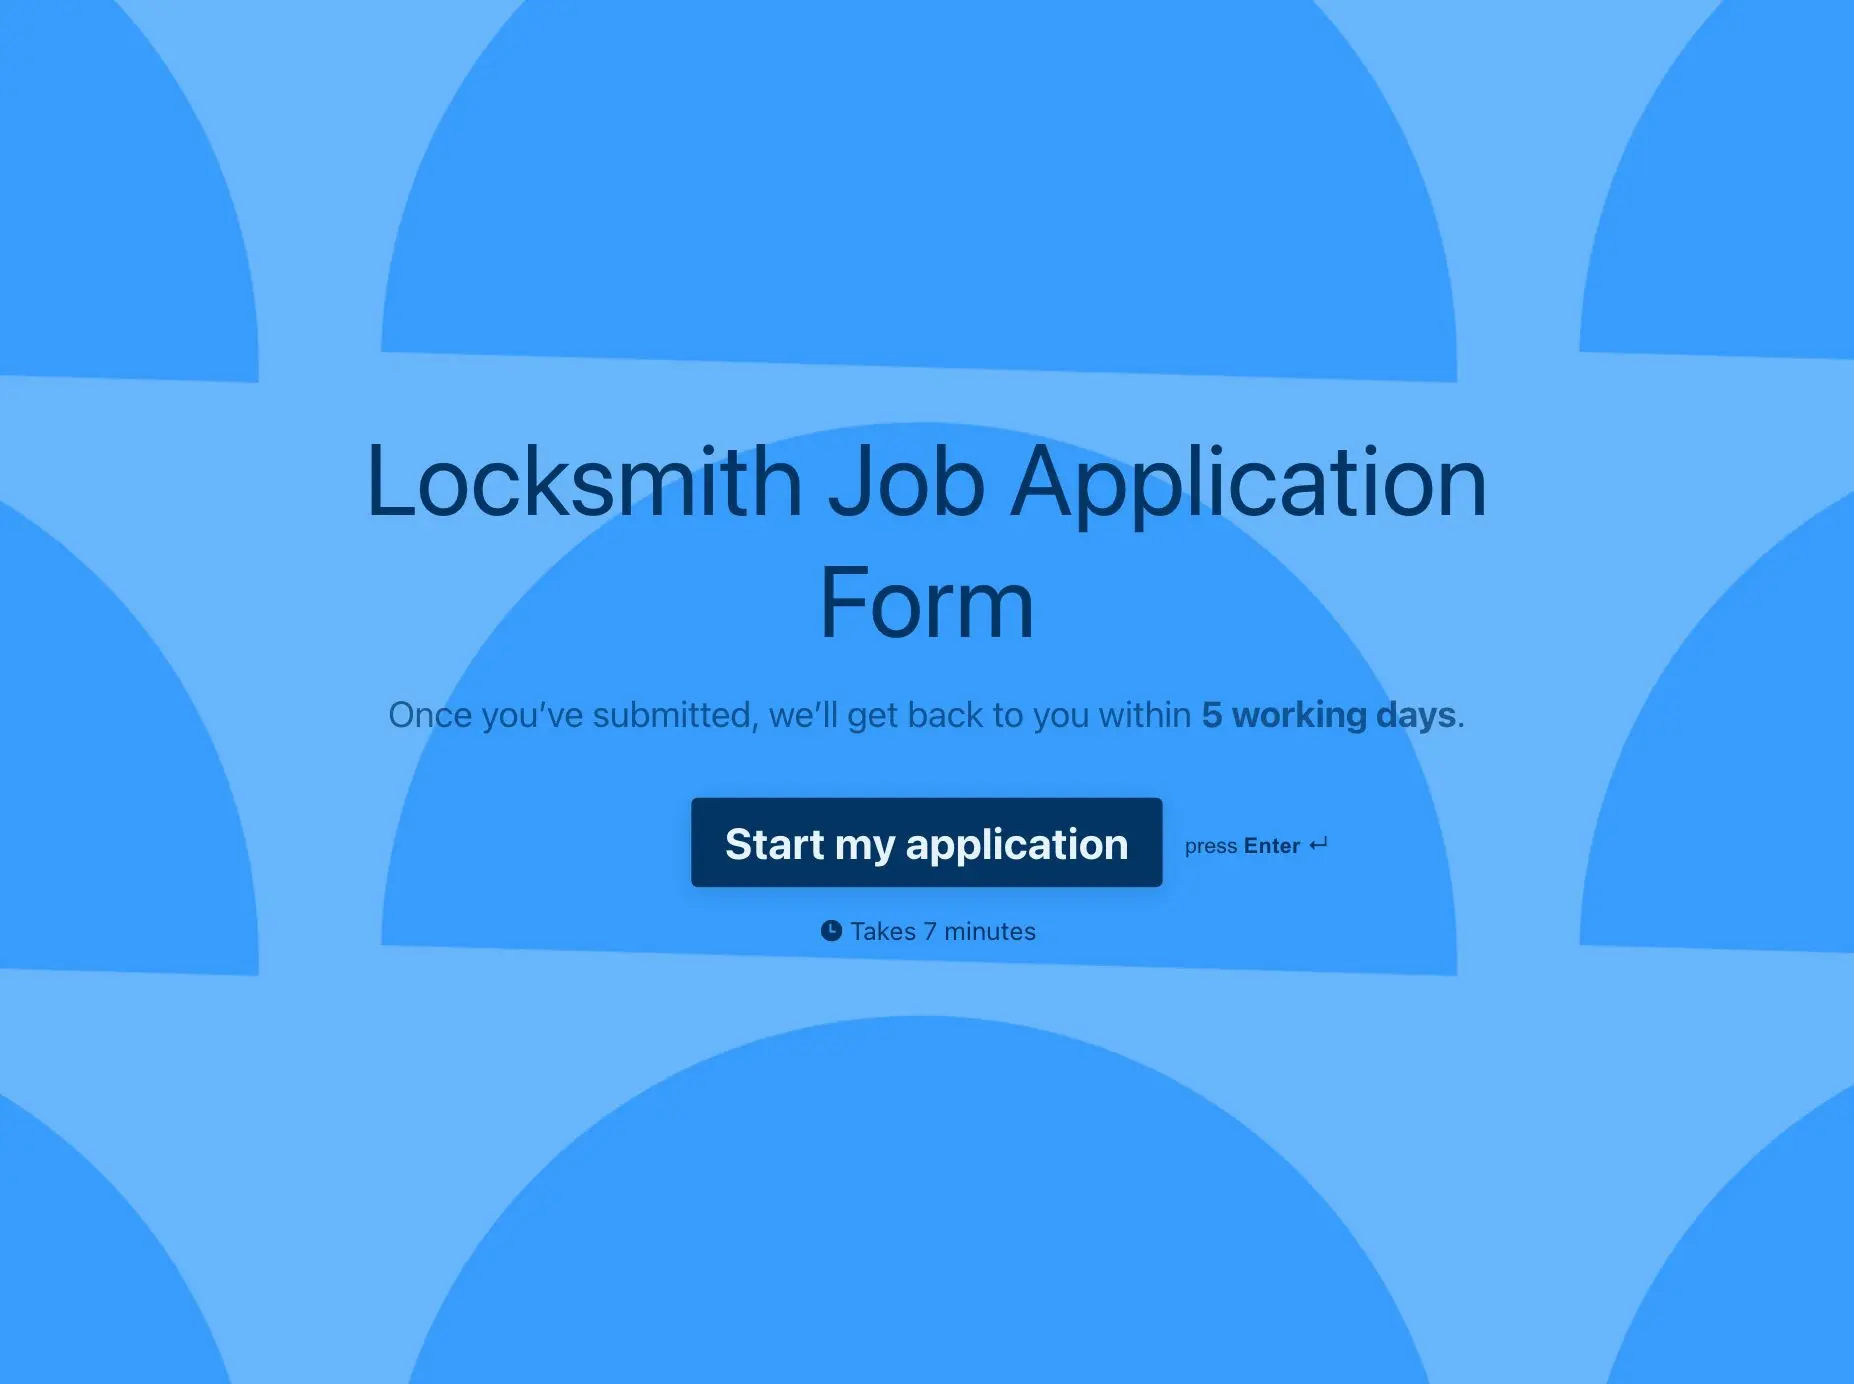 Locksmith Job Application Form Template Hero